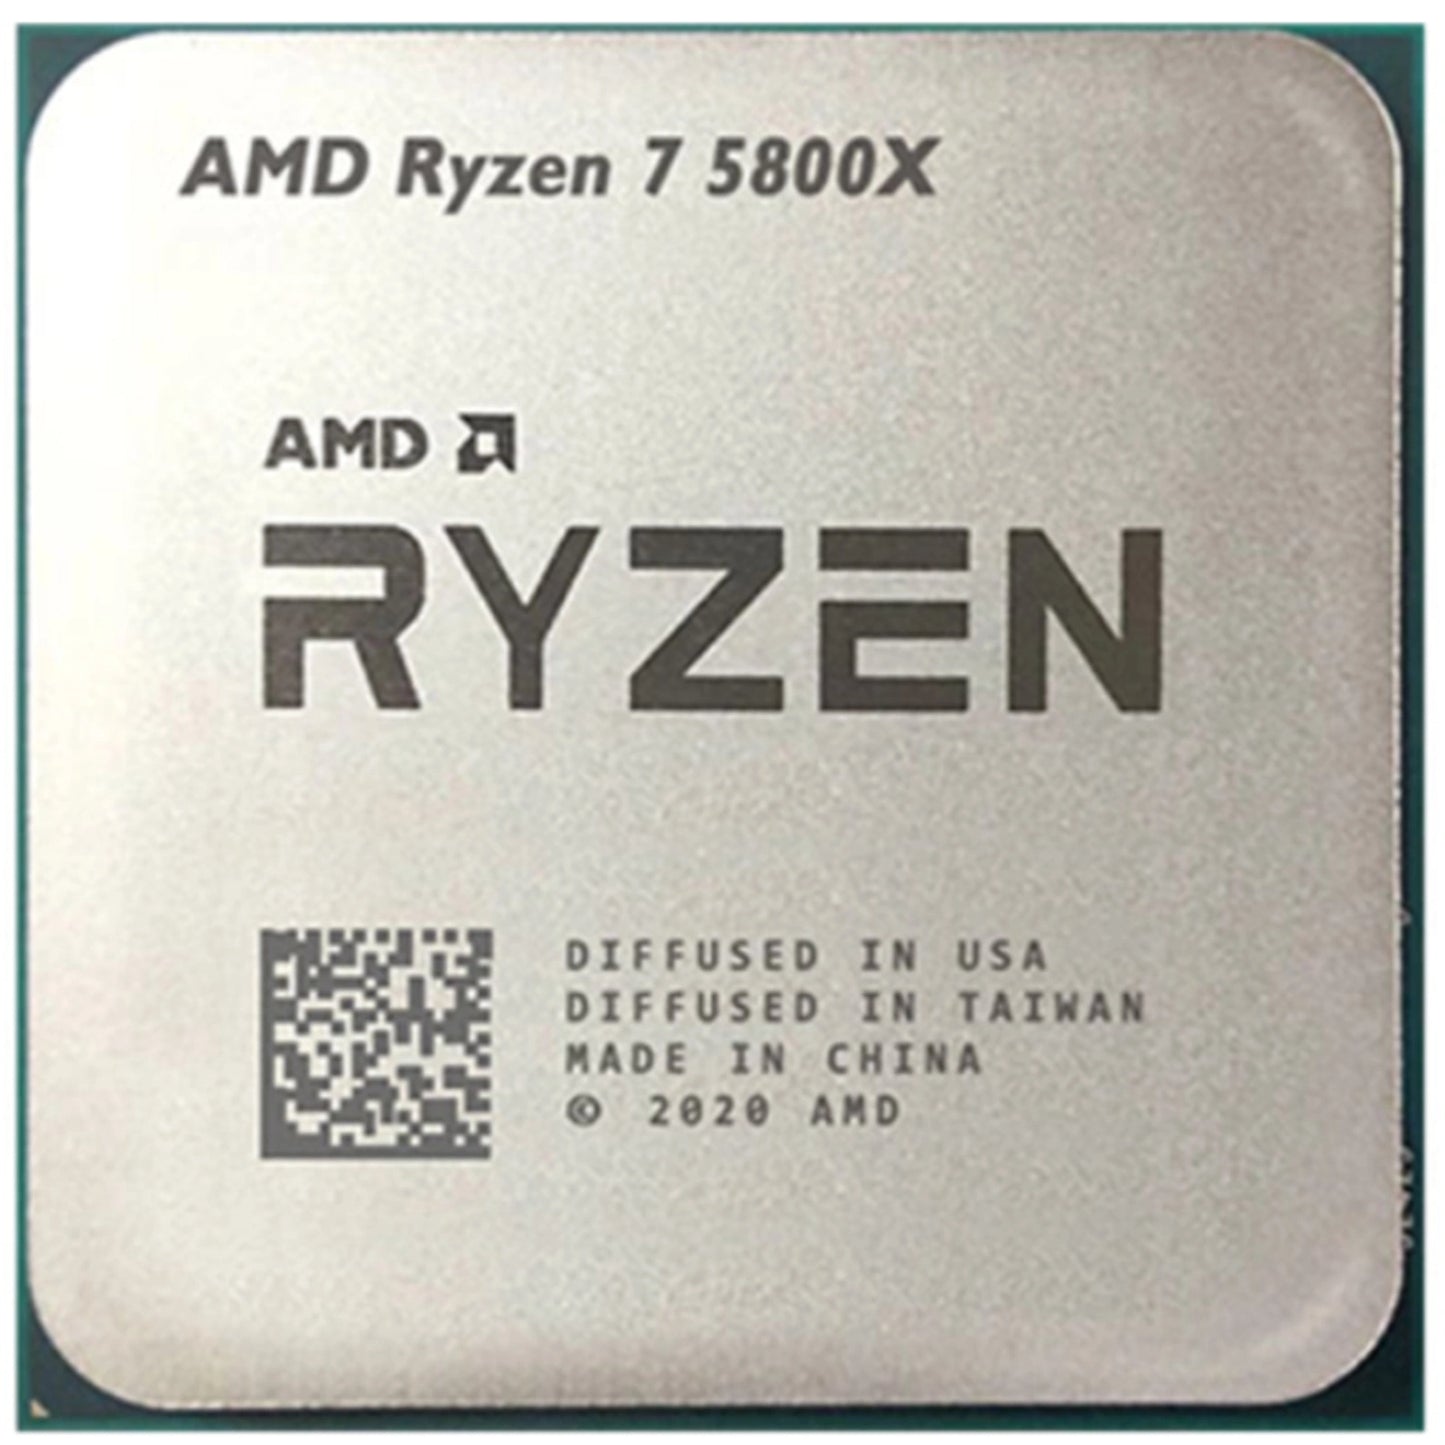 AMD Ryzen 5 5800X CPU CPU 8 Cores 16 Threads 4.7Ghz Max Turbo Frequency